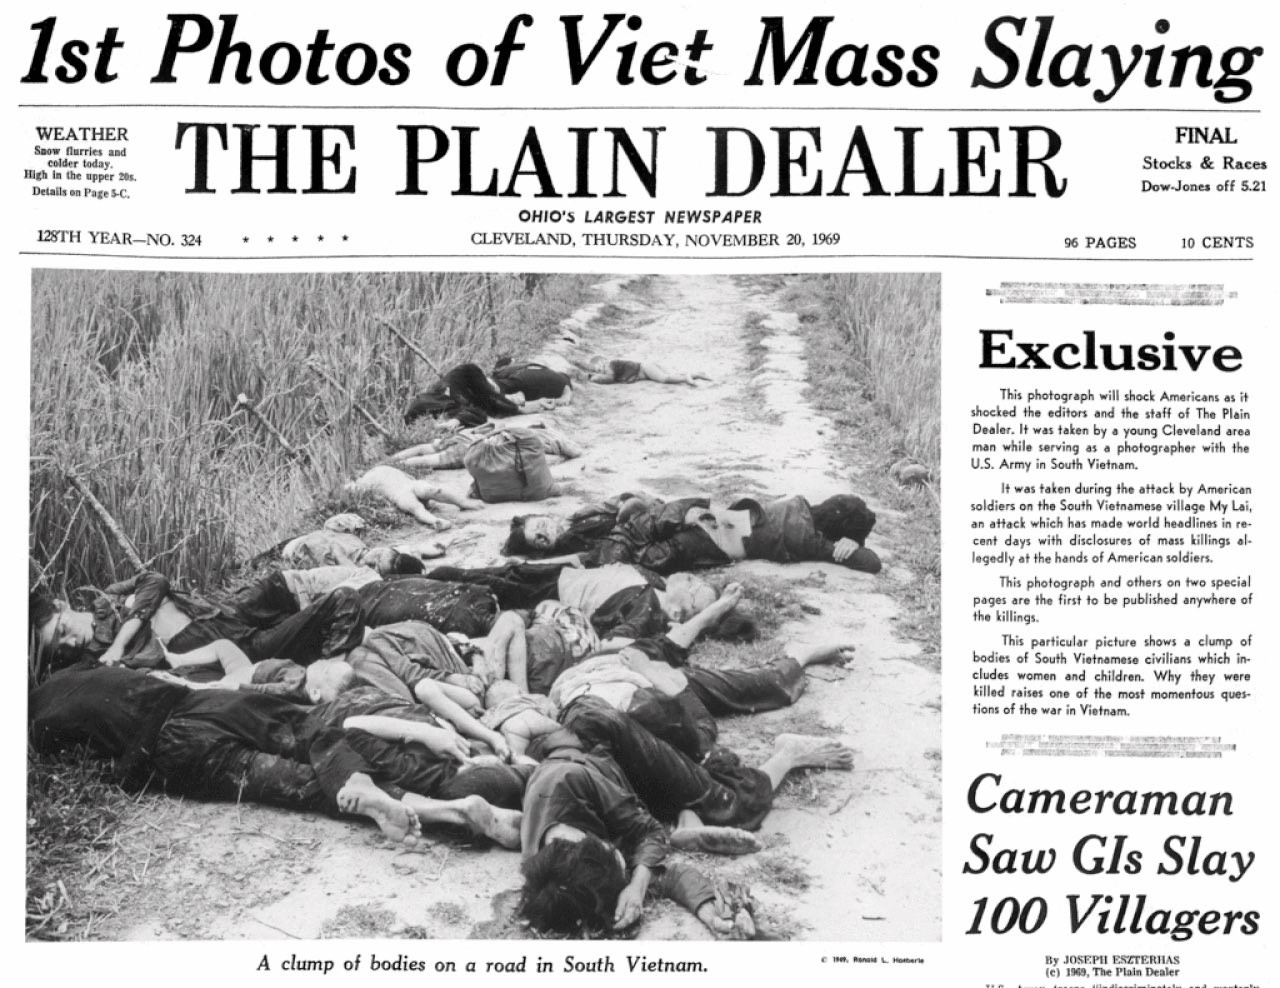 Plain Dealer Published Photos of My Lai Massacre in Vietnam 50 Years Ago Today | Cleveland News | Cleveland | Cleveland Scene